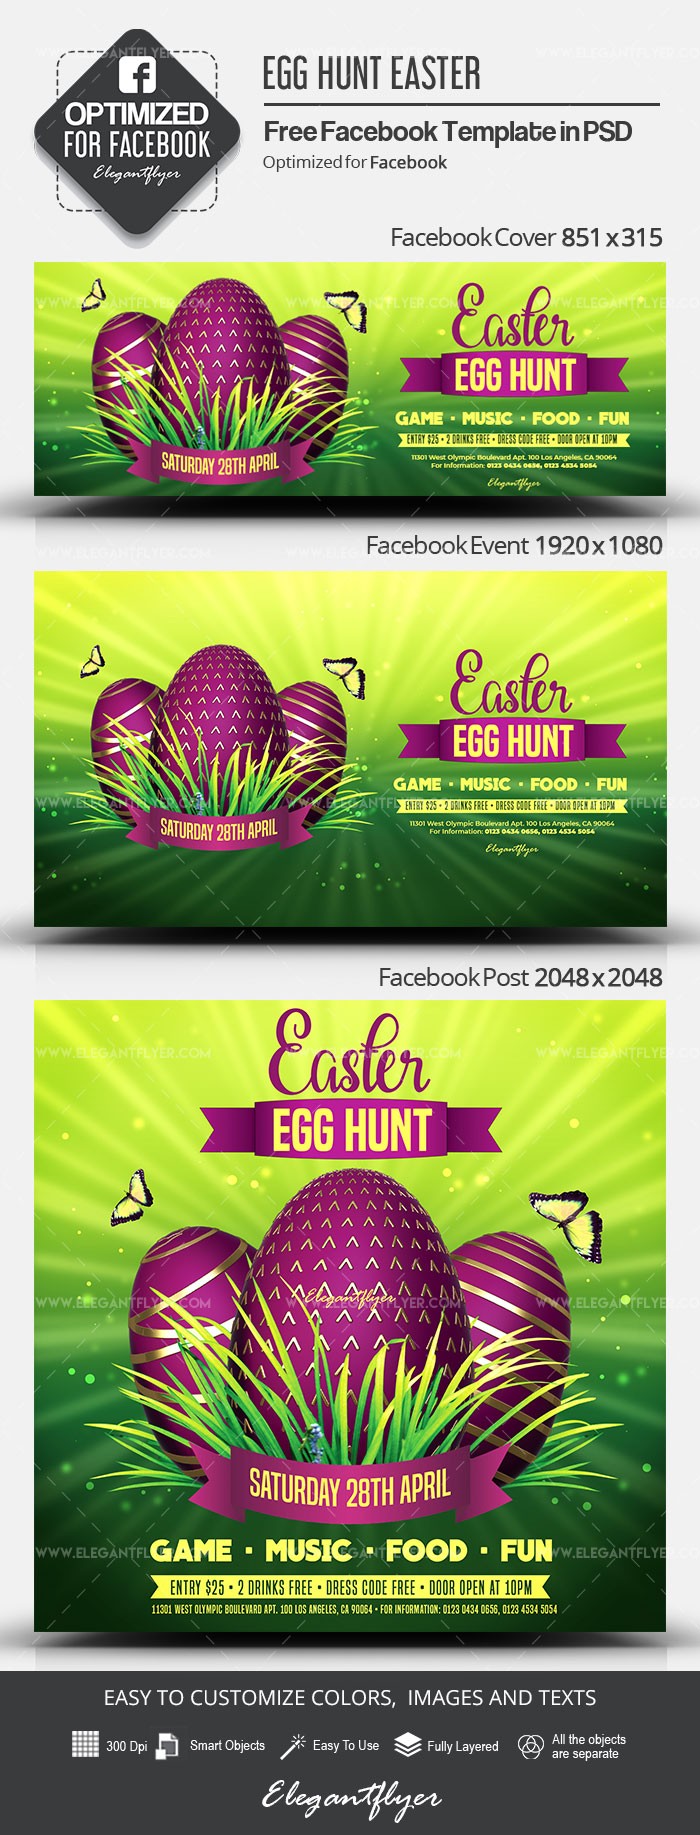 Egg Hunt Easter by ElegantFlyer